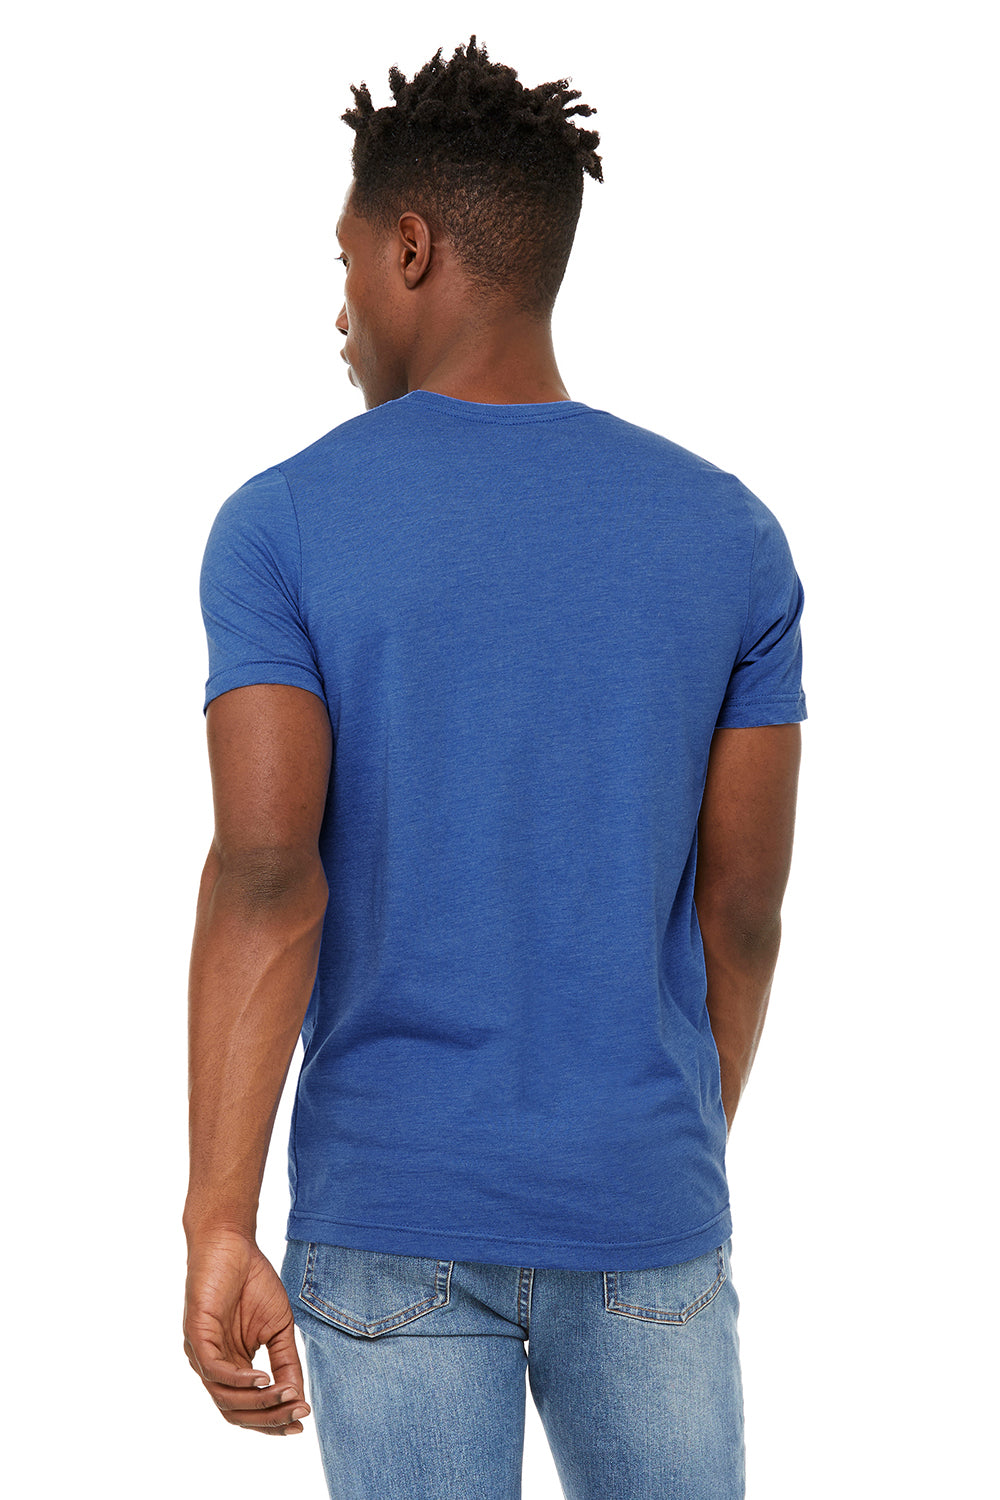 Bella + Canvas BC3301 Jersey Short Sleeve Crewneck T-Shirt Heather Royal Blue Back